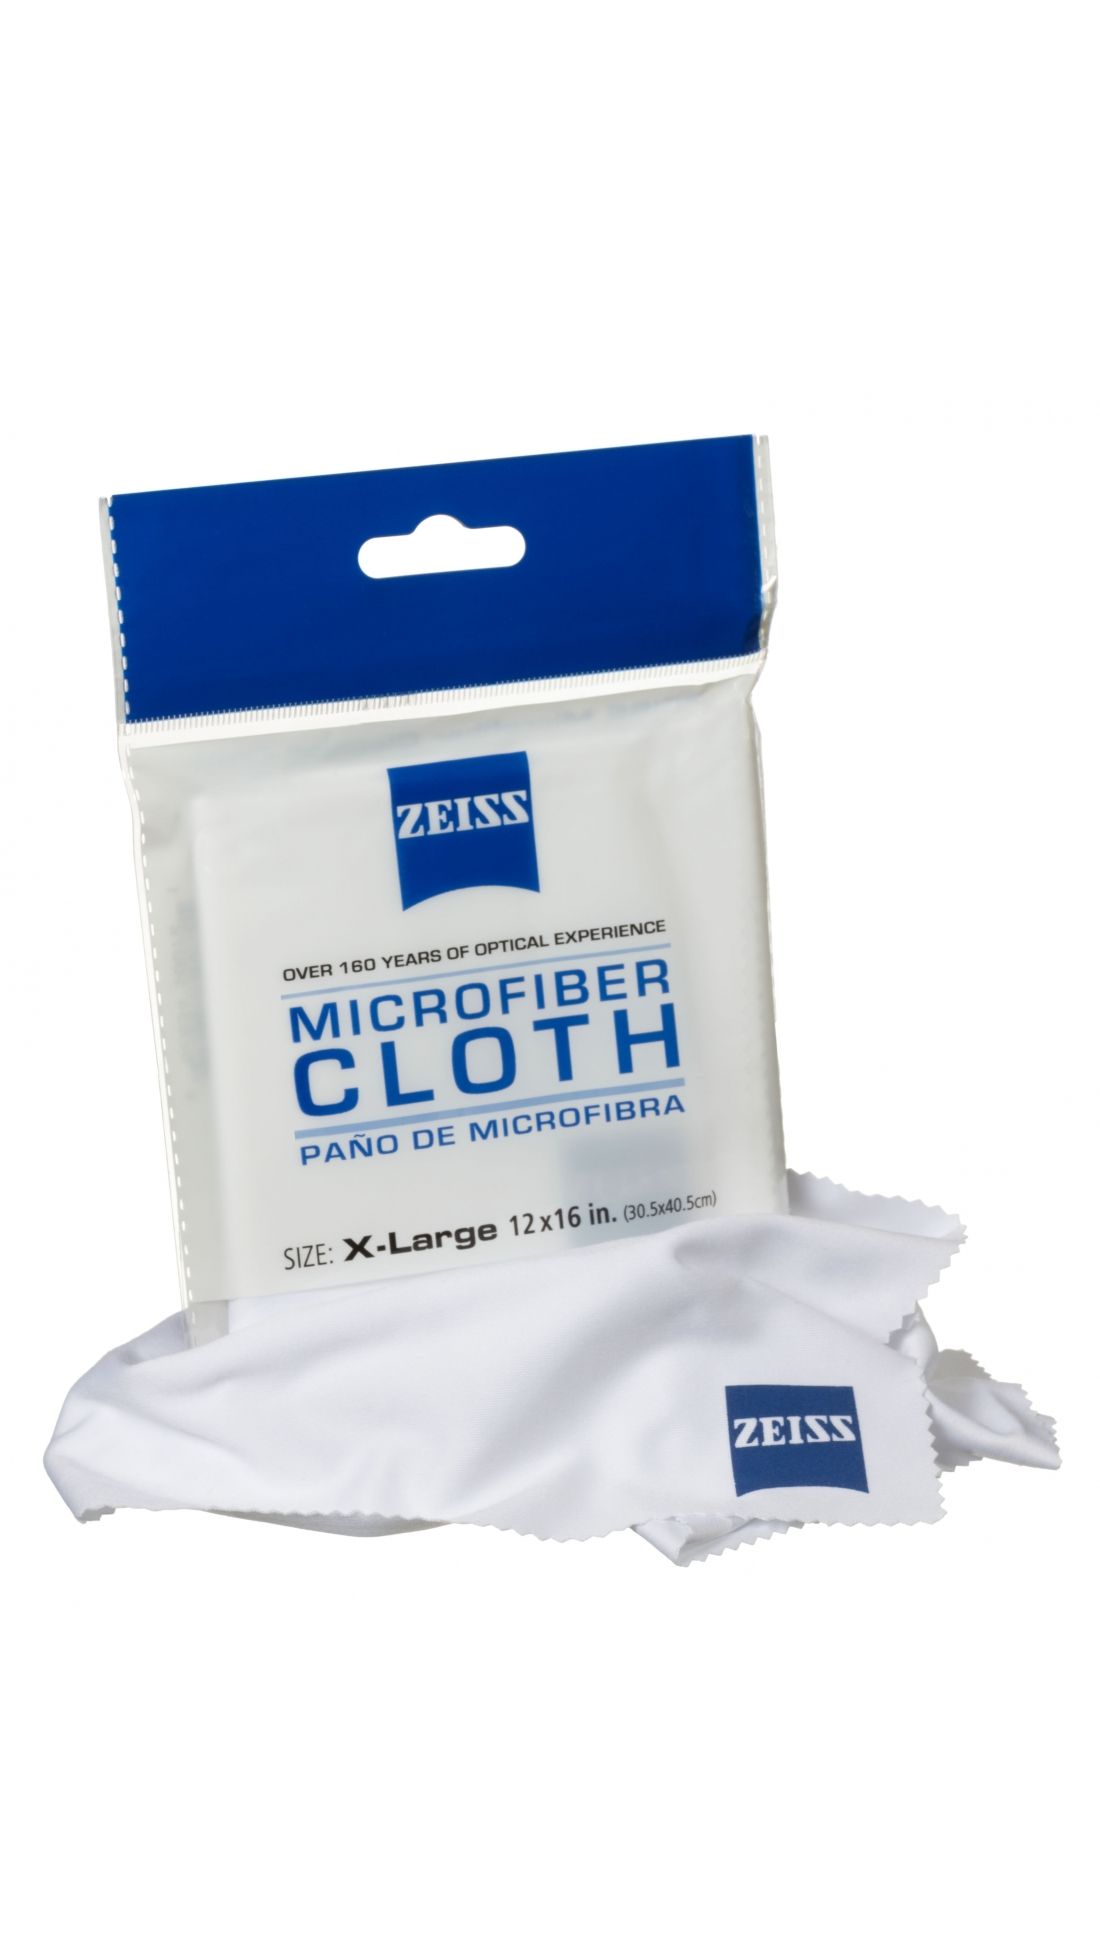 Zeiss Jumbo Microfiber Cloth 2105 355. Zeiss Lens Cleaning.